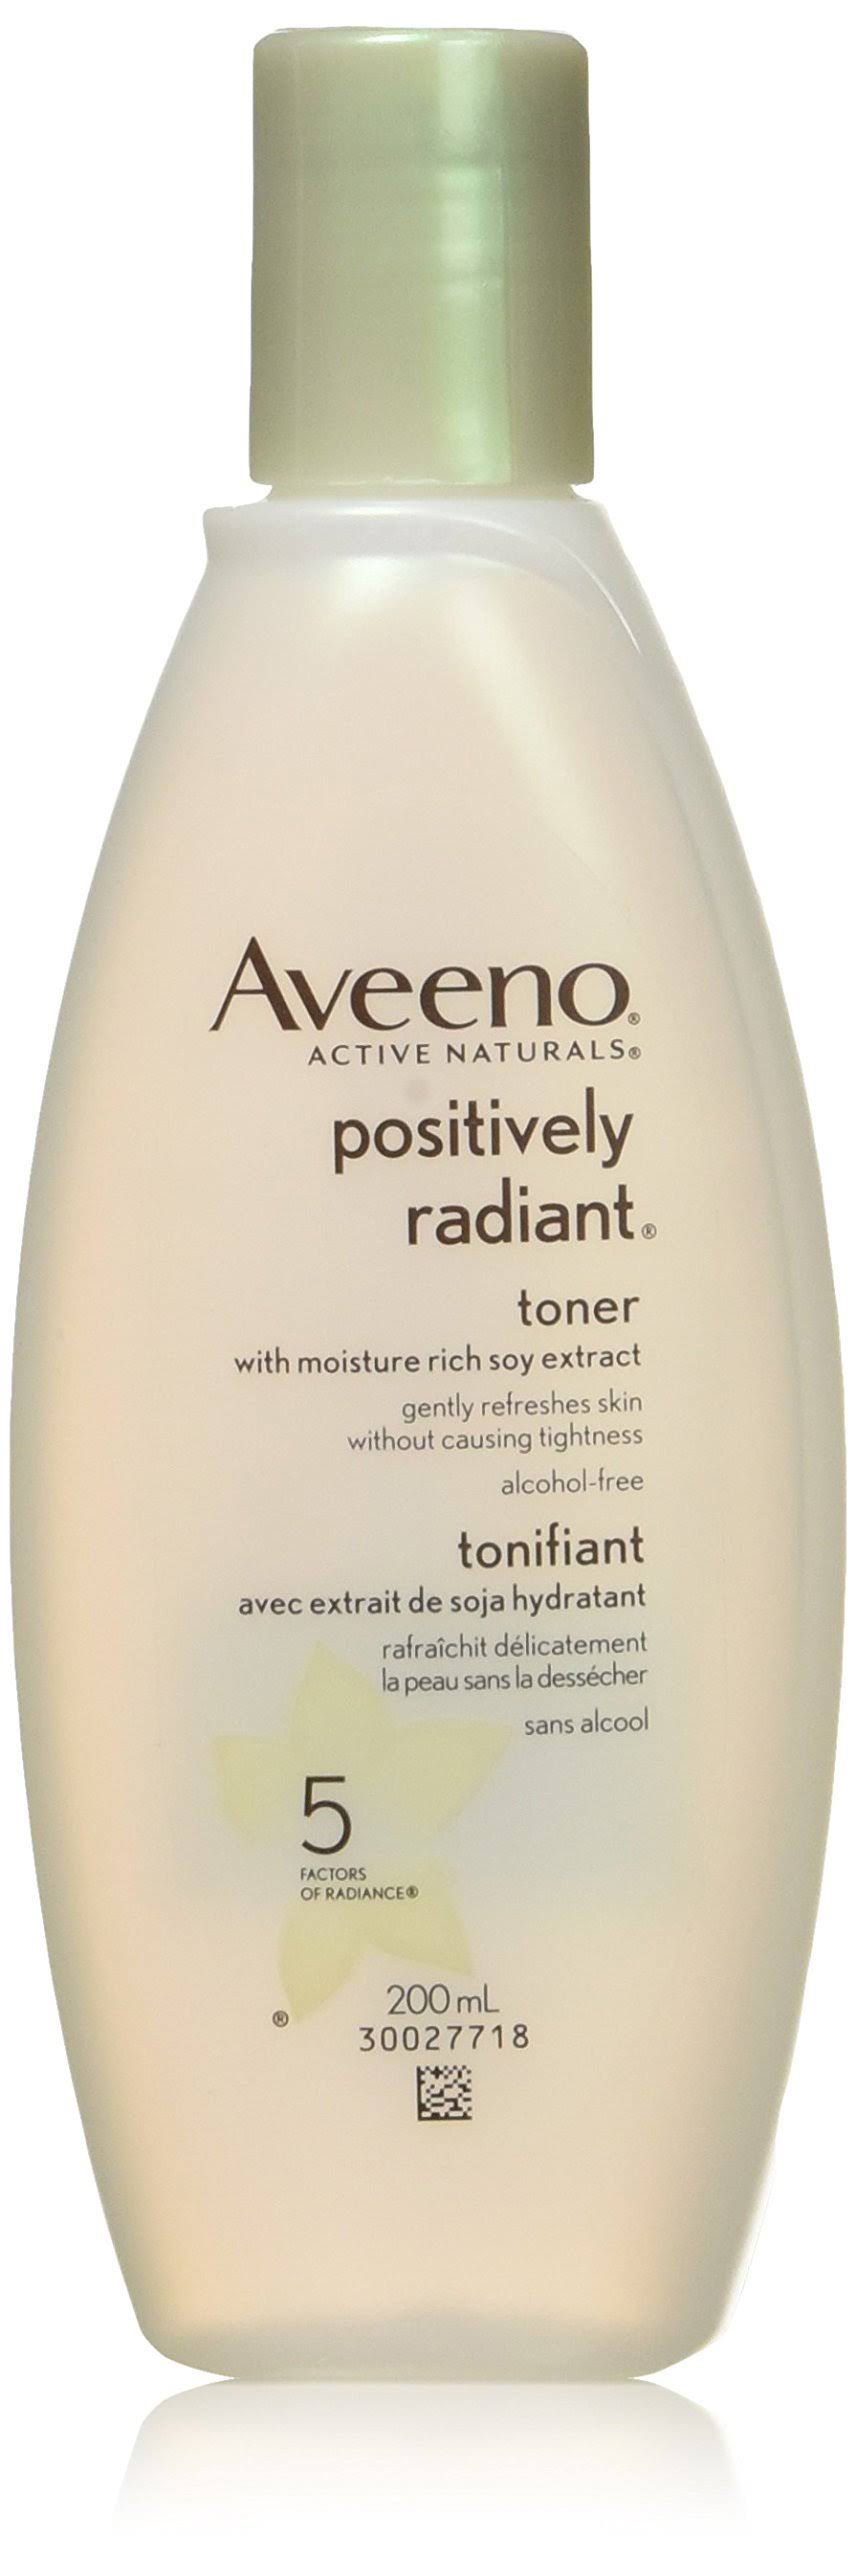 Aveeno Skin Clarifying Toner - with Soy Extract, Alcohol-Free, 6.7oz